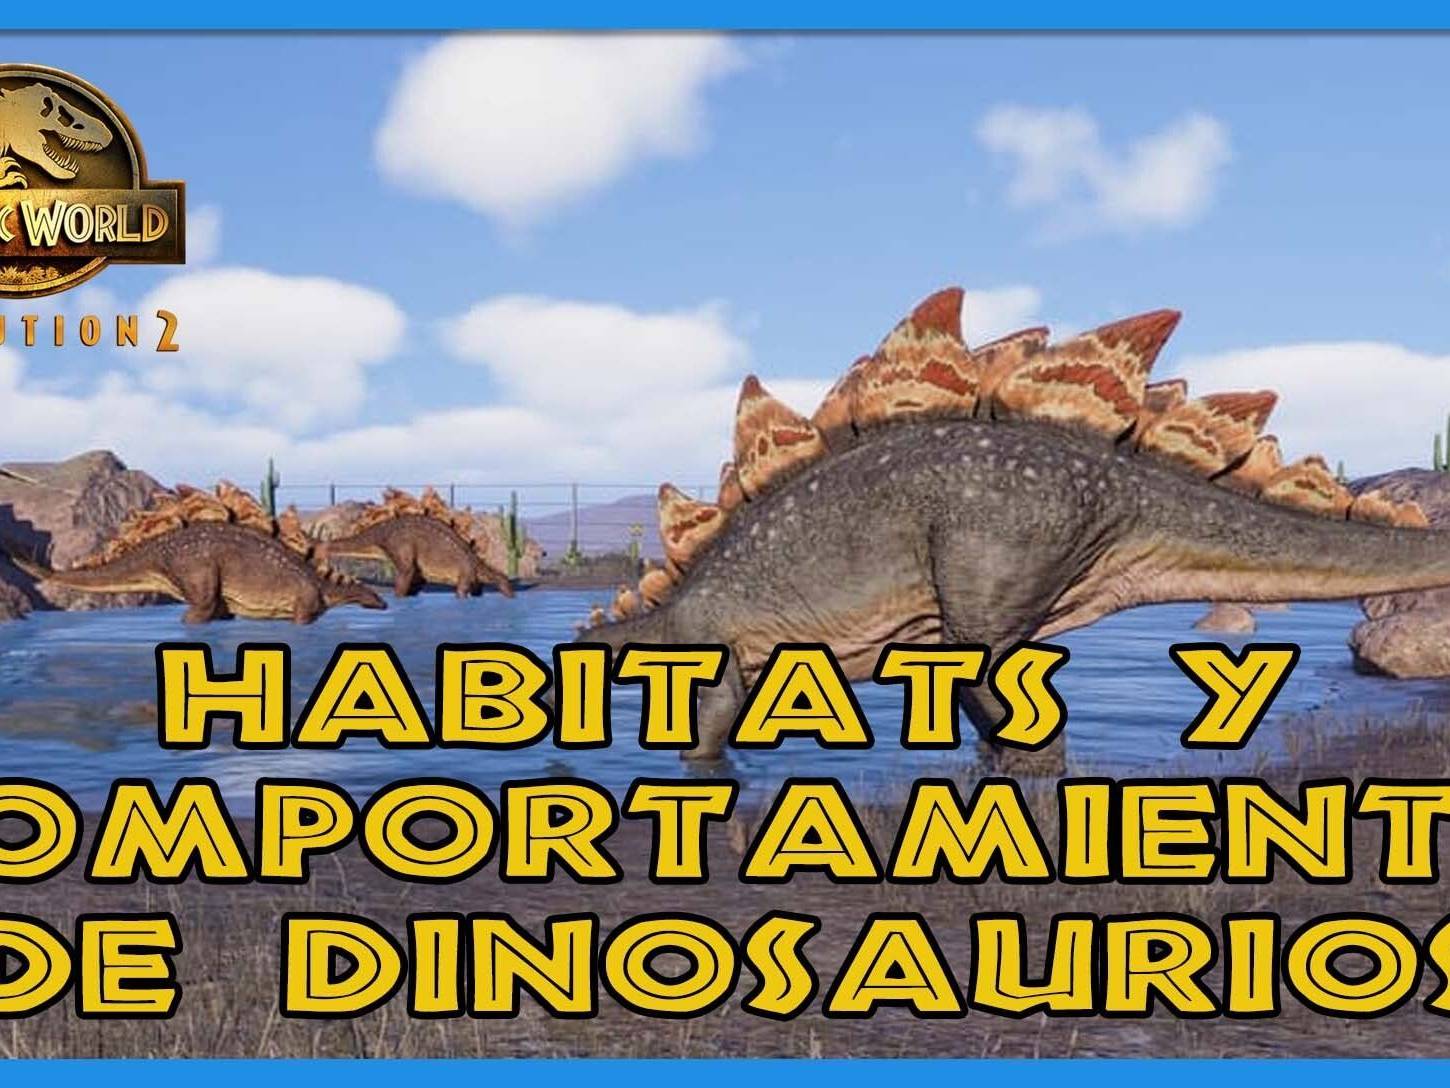 Jurassic World Evolution 2: hábitat y comportamiento de dinosaurios